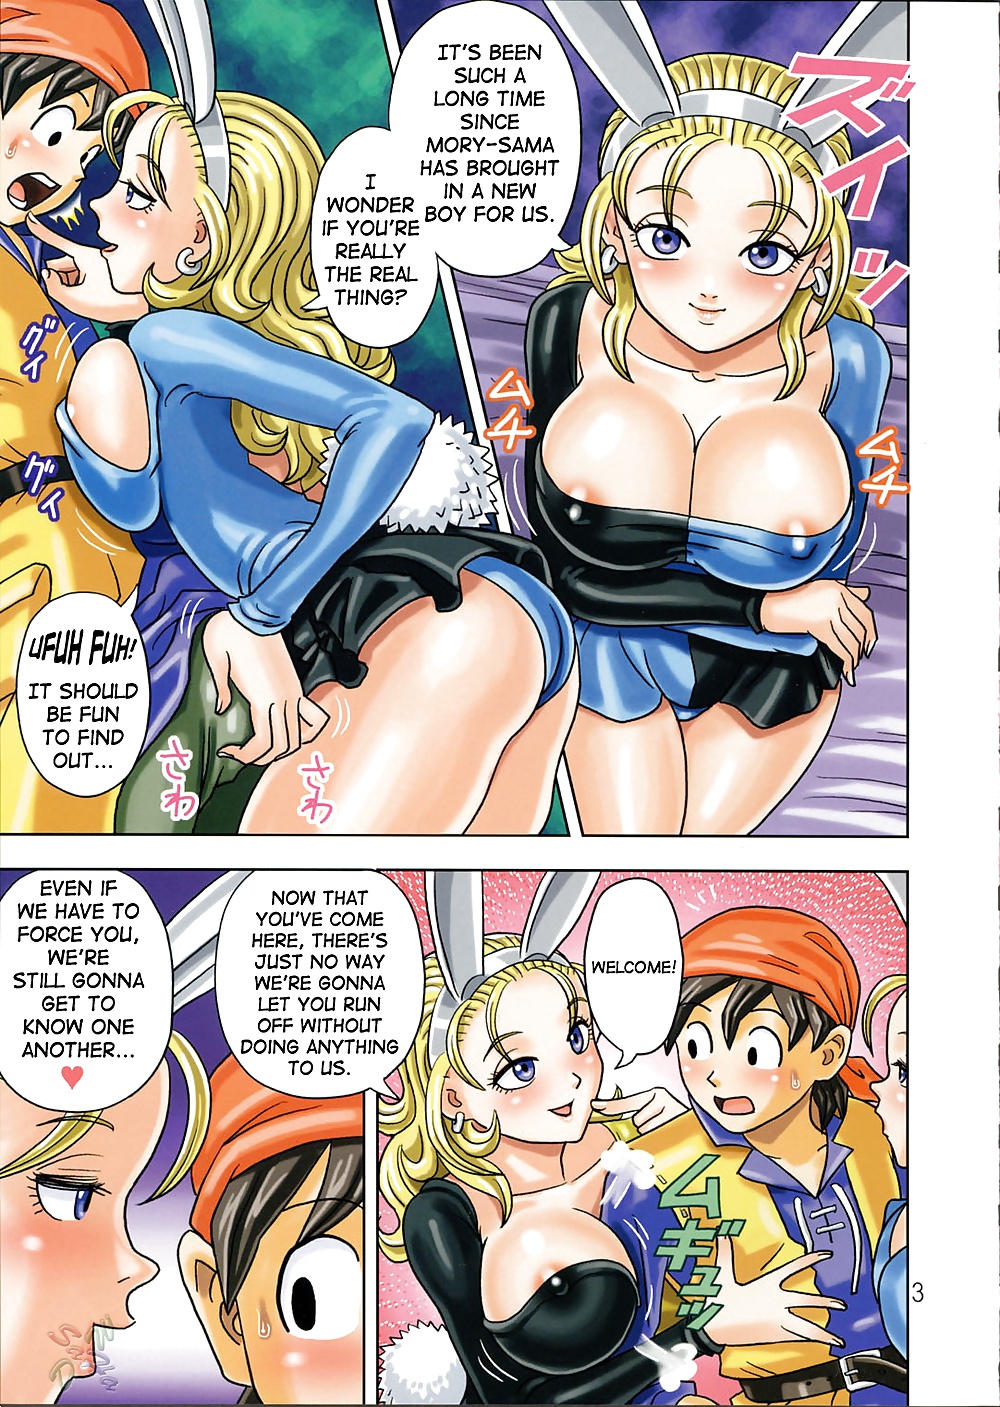 Pervertiert Hentai Comic-Mädchen In Der Heißen Knappen Outfits! #9350222